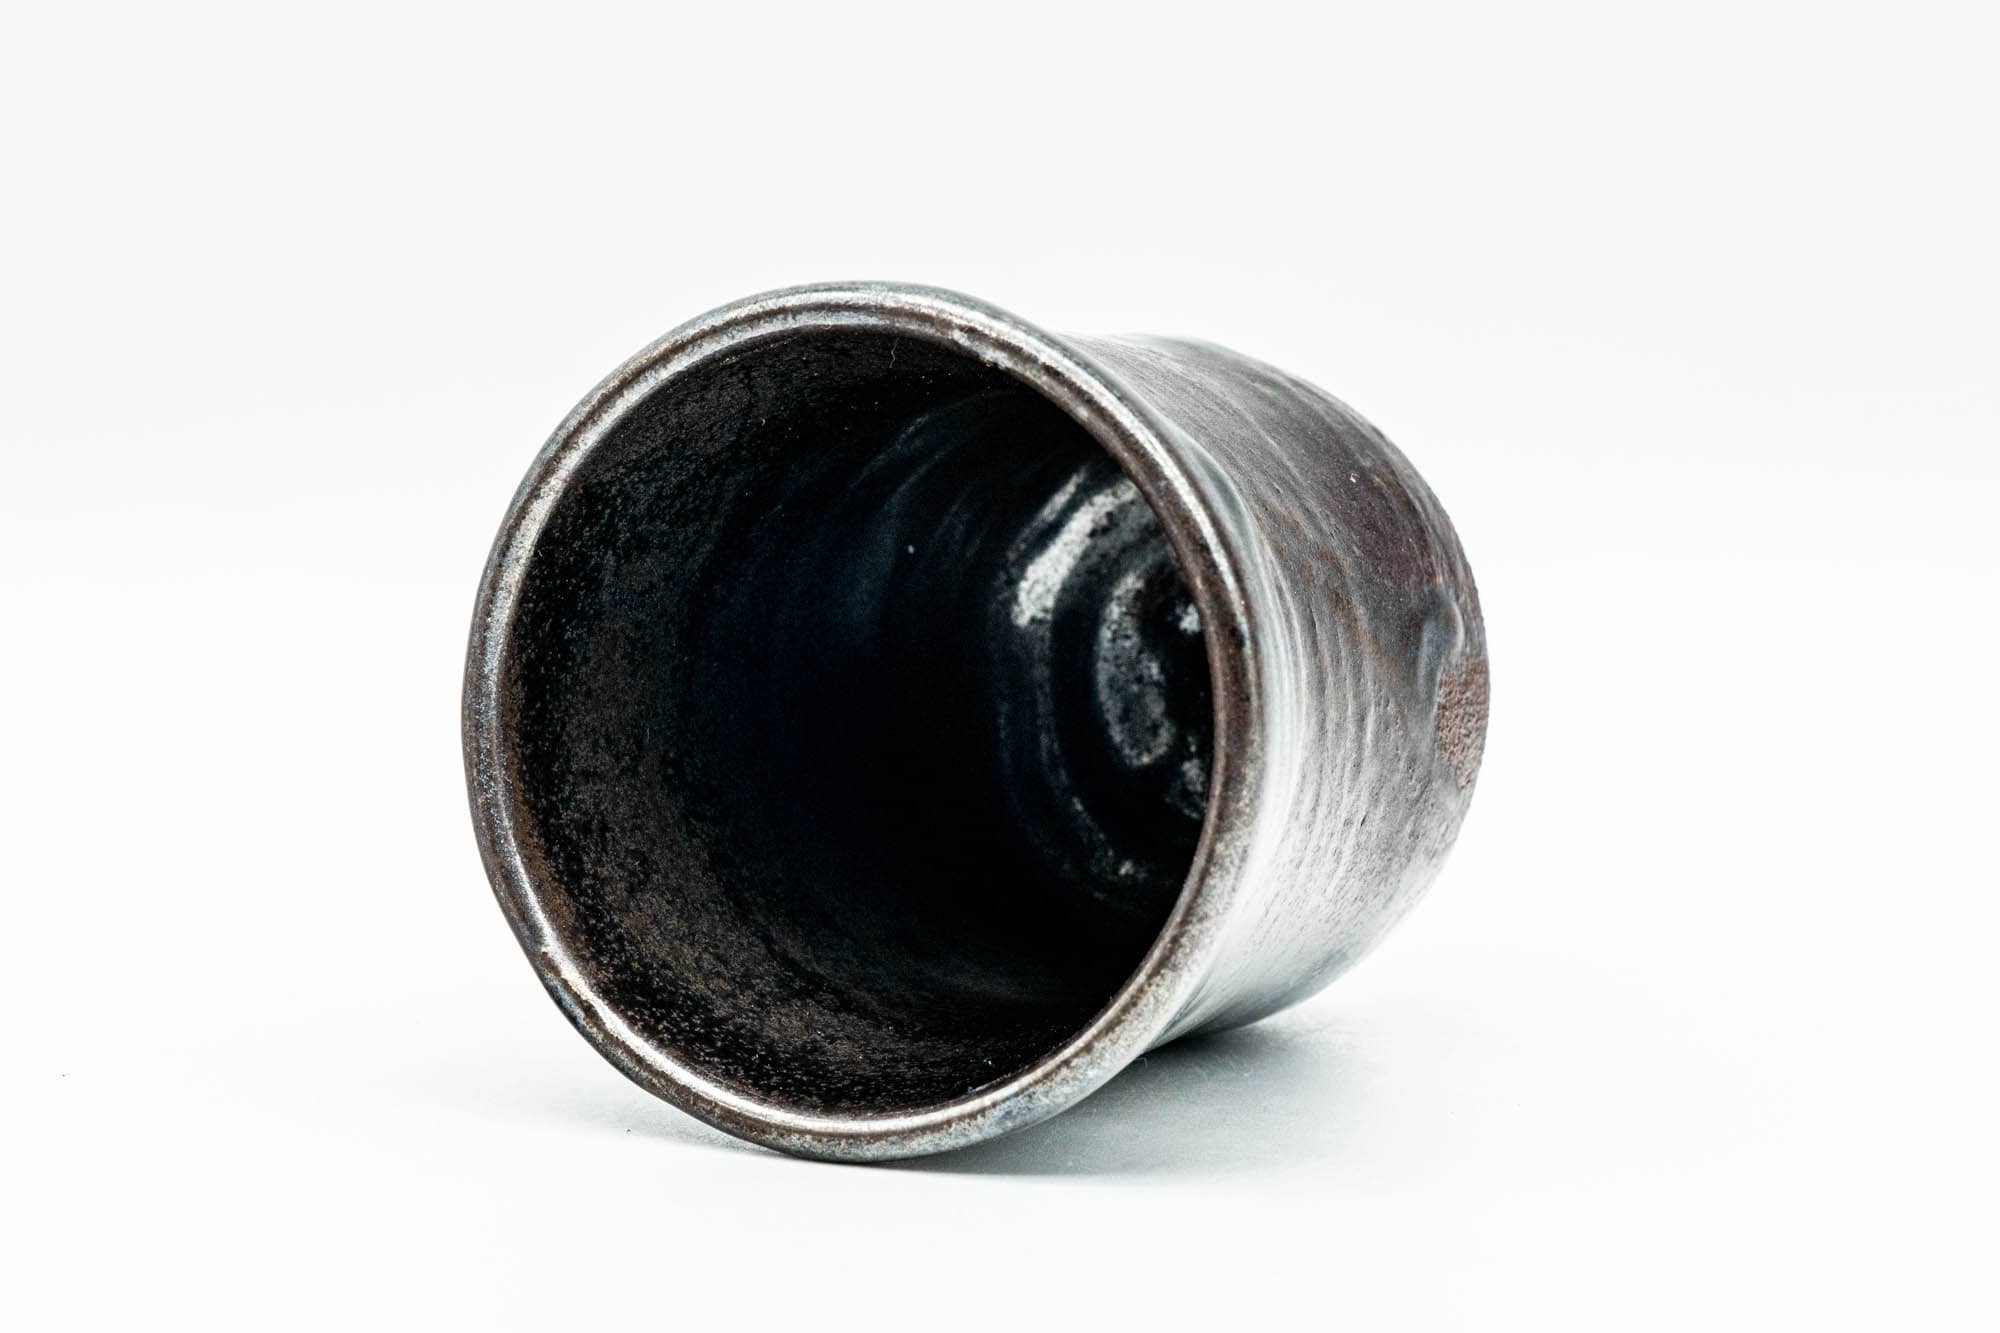 Japanese Teacup - Abstract Metallic Black Glazed Yunomi - 95ml